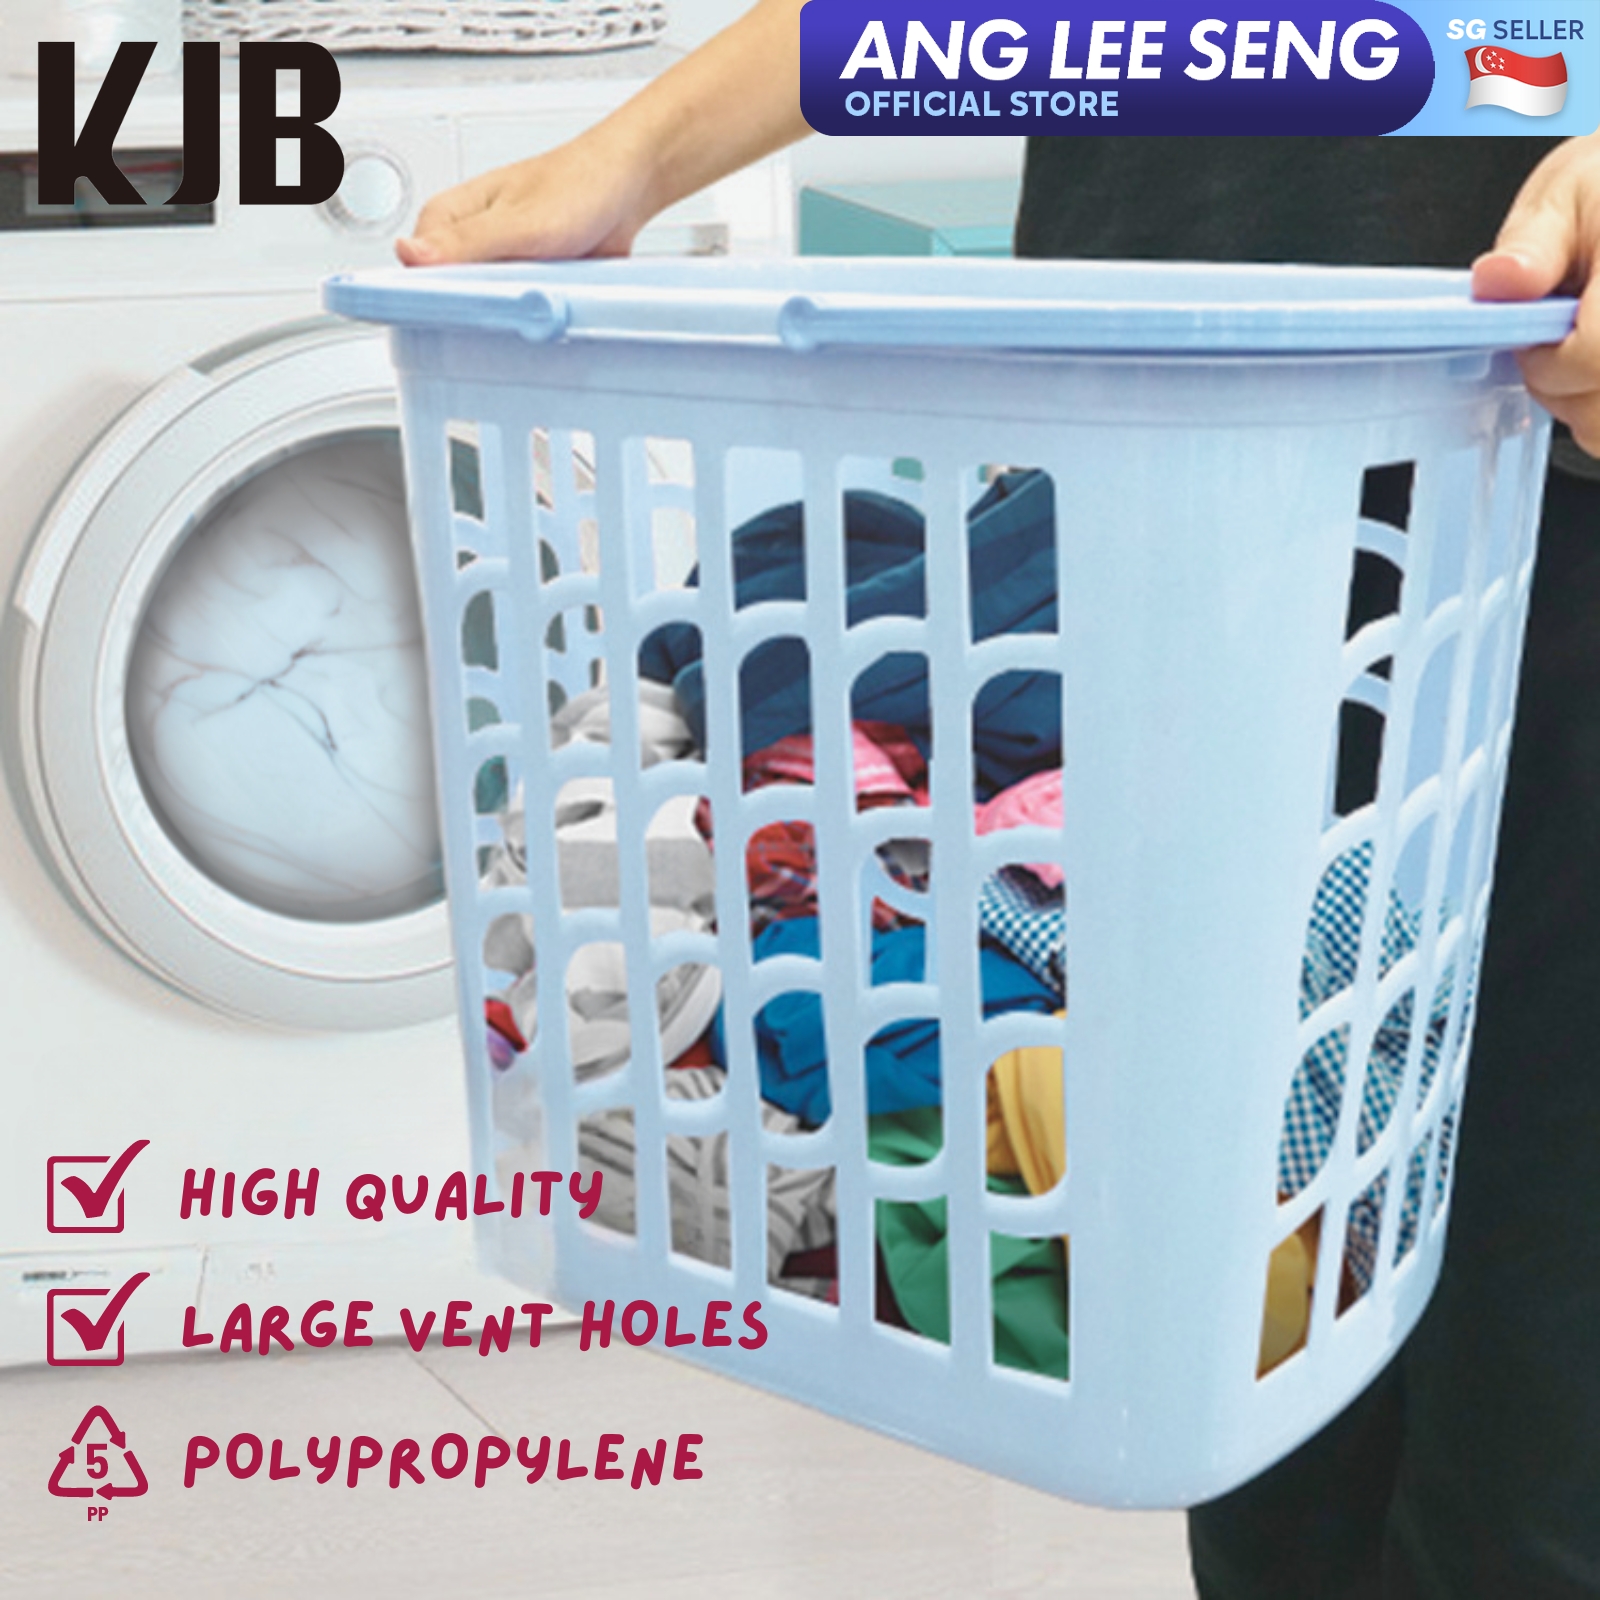 KangjiaBao Plastic Laundry Basket with Carrying Handles